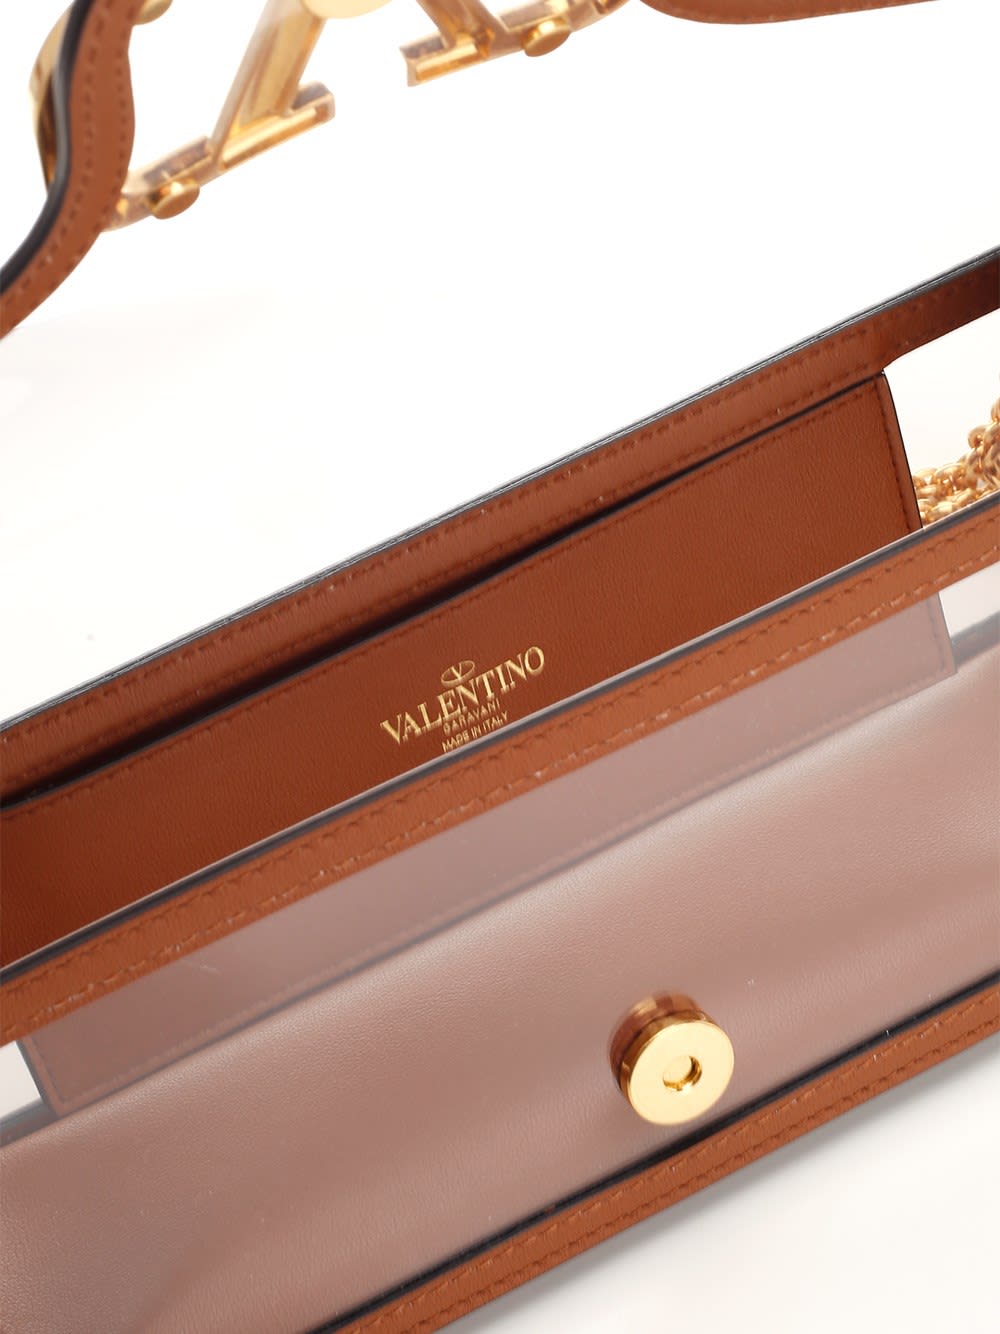 Valentino Garavani's Locò bag is your latest '90s-inspired style